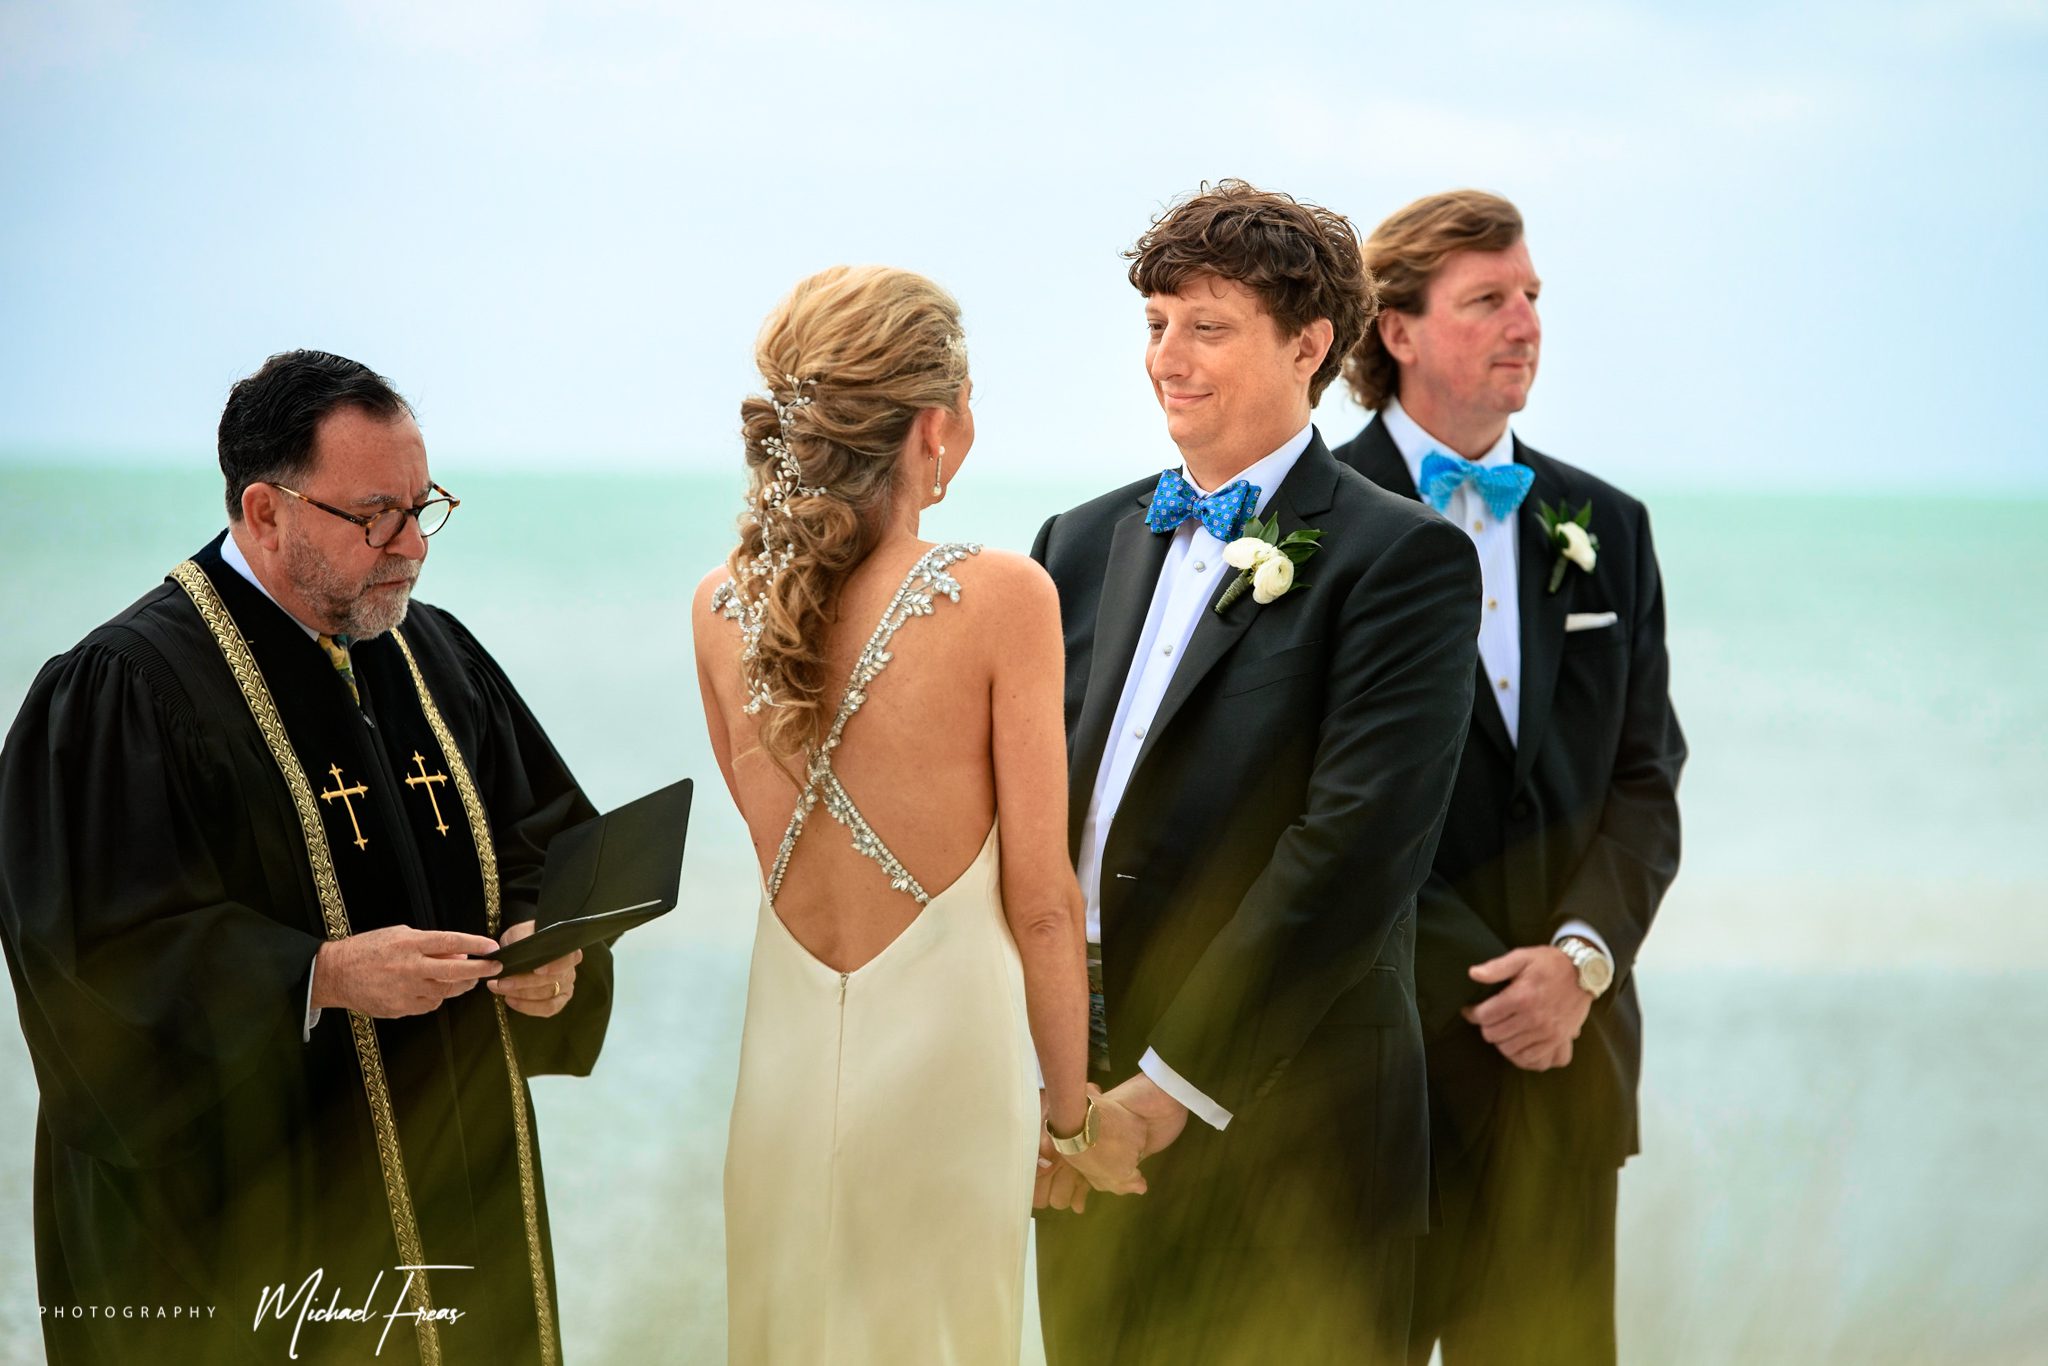 A couple celebrates their destination wedding on Sunset Key beach in the Florida Keys.